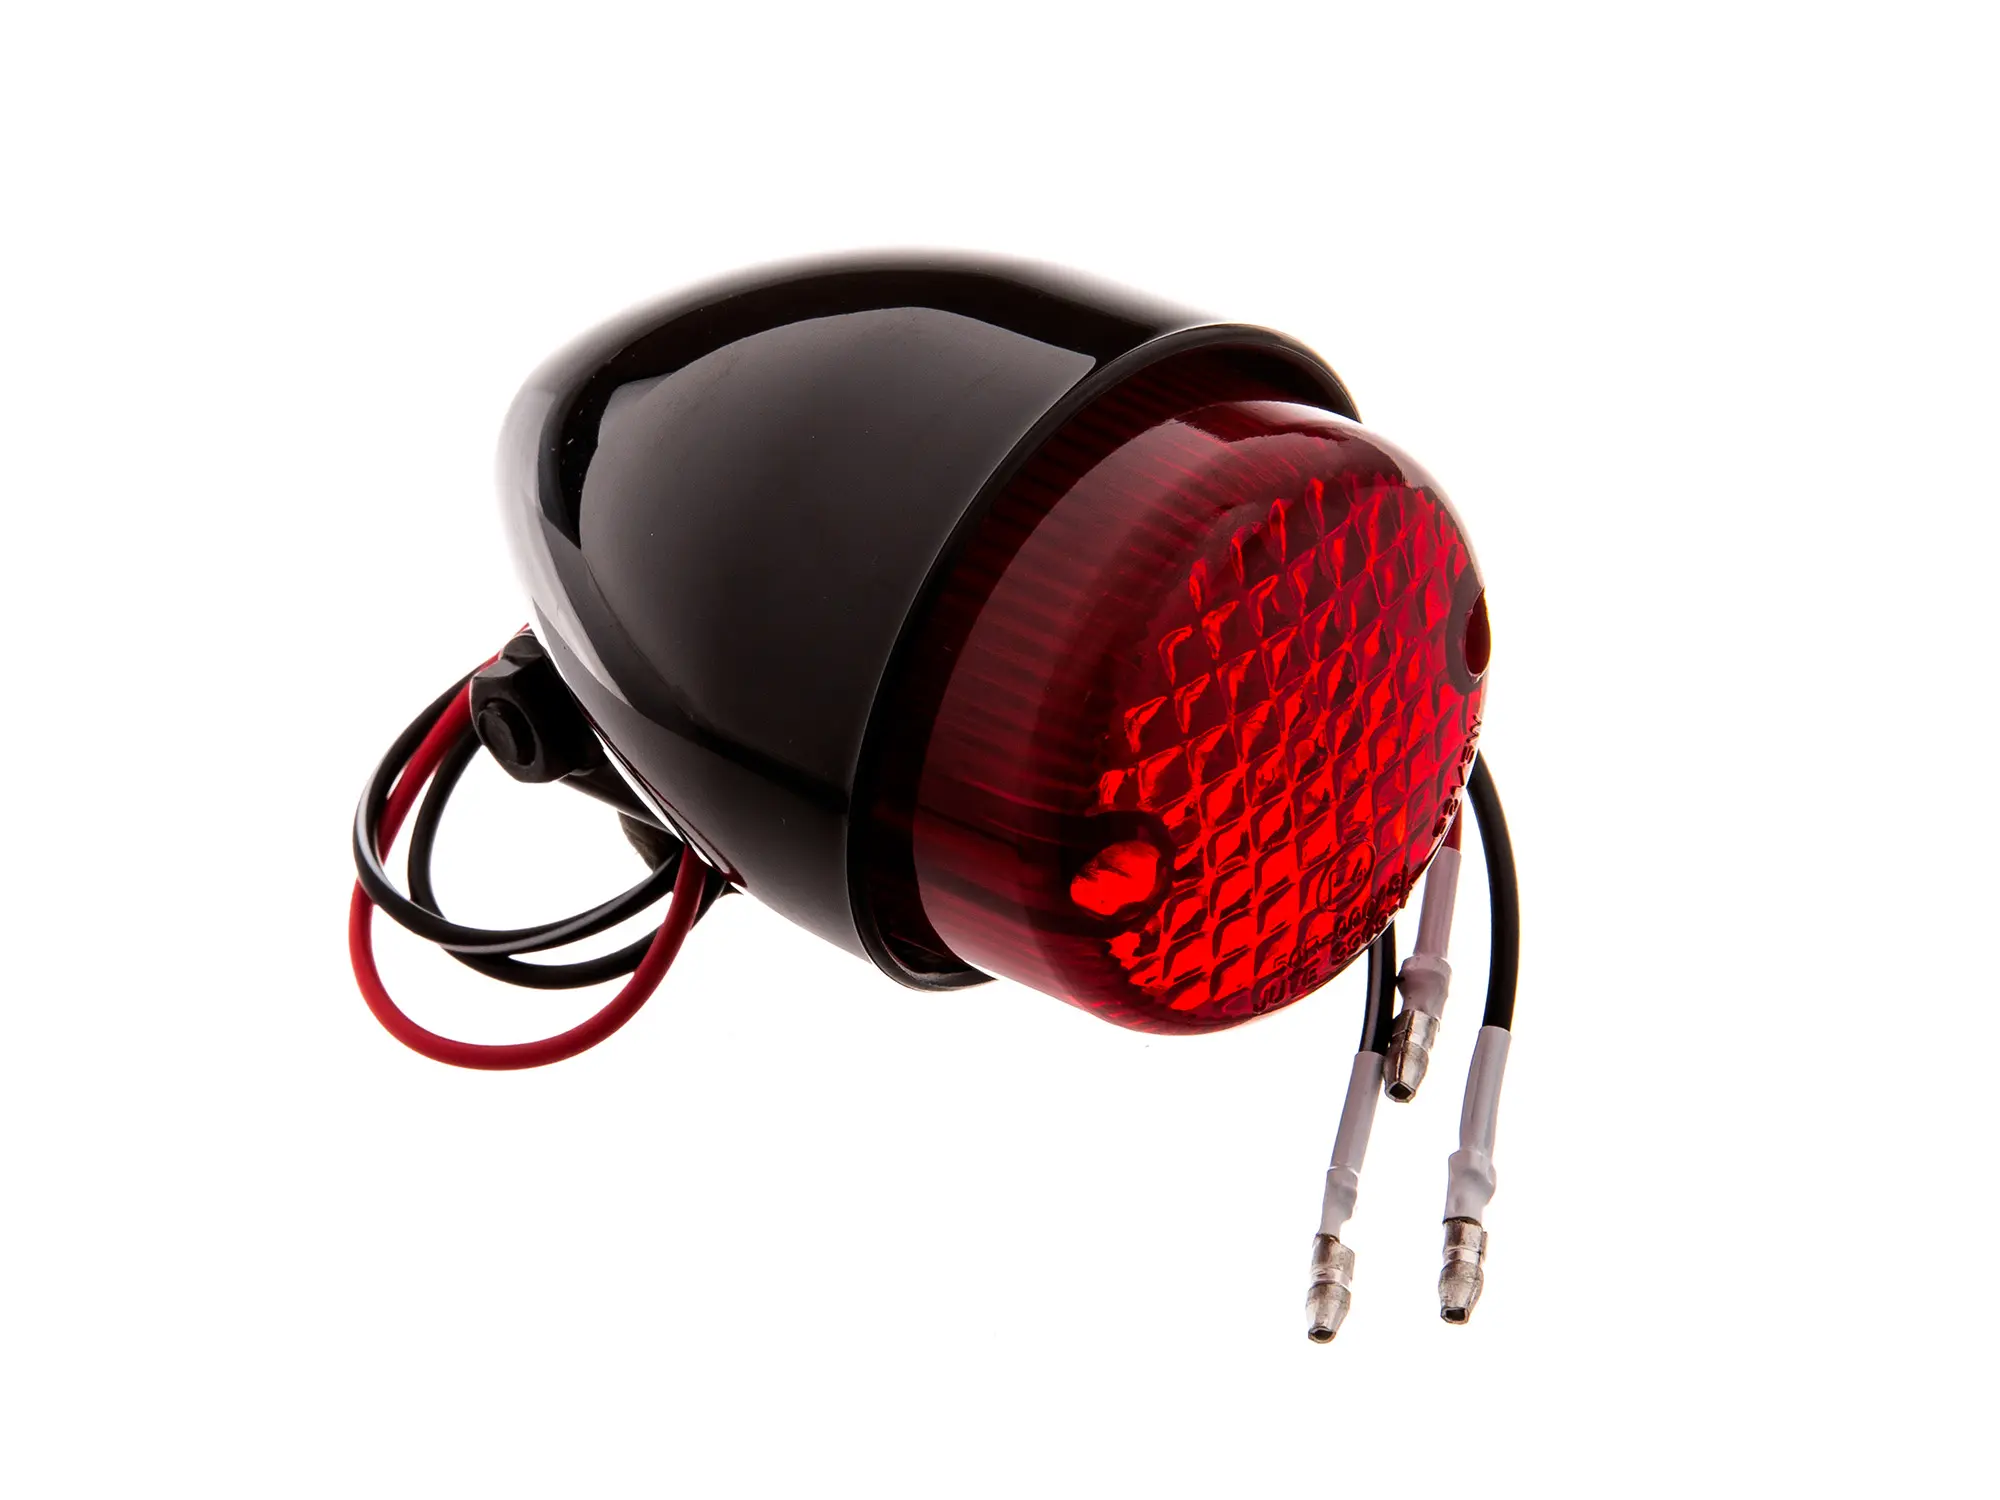 Retro LED taillight "TEXAS", Item no: 10033019 - Image 1